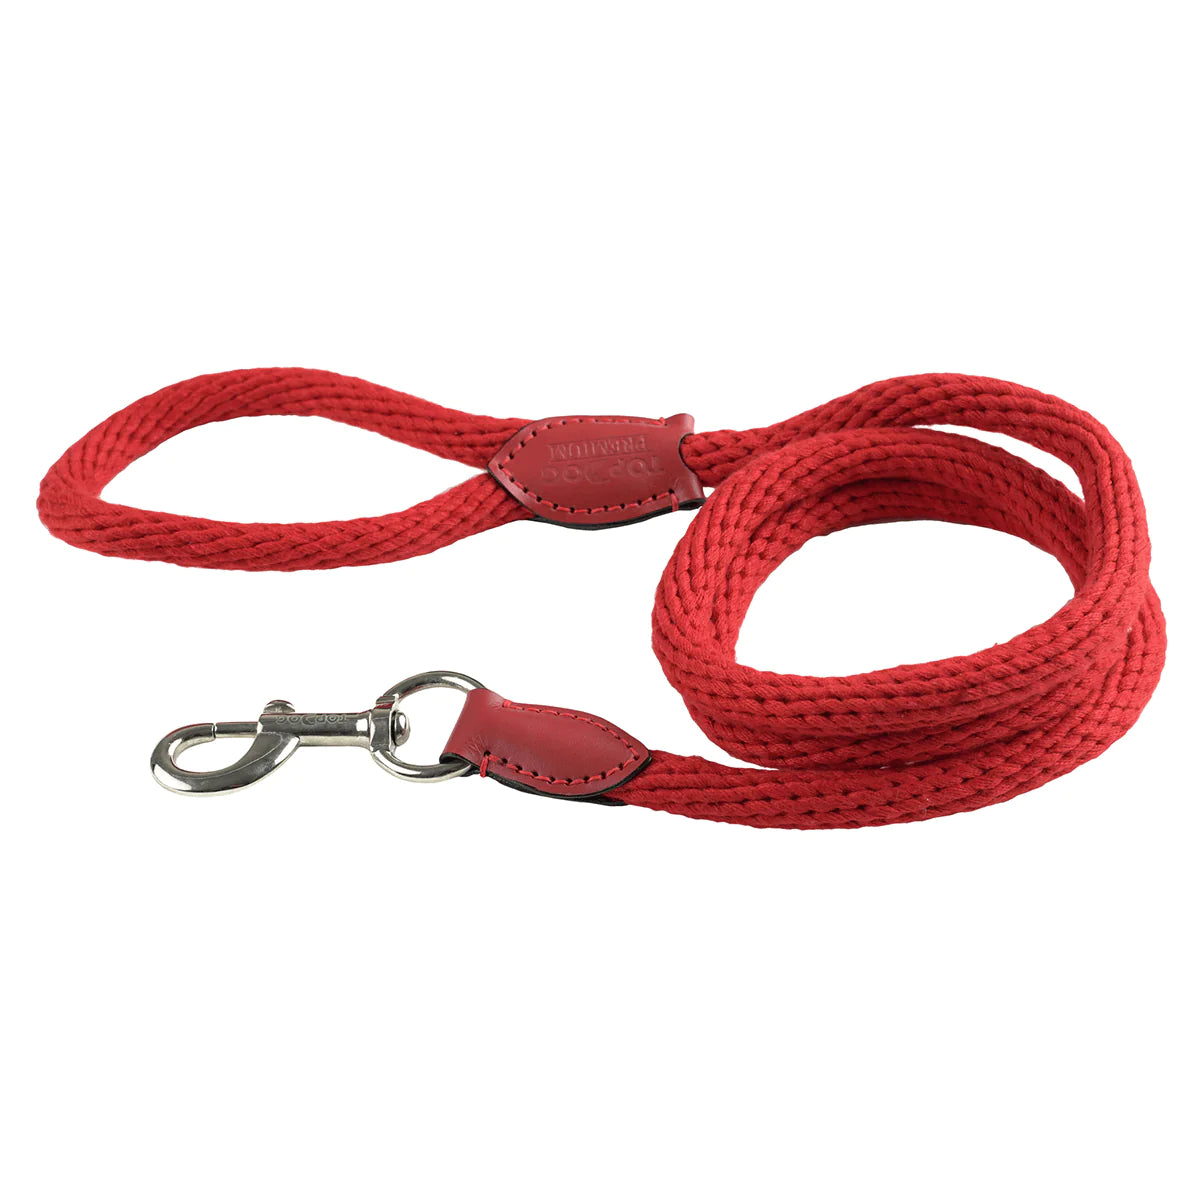 TOPDOG PREMIUM Cotton Rope Leash - Red, Large